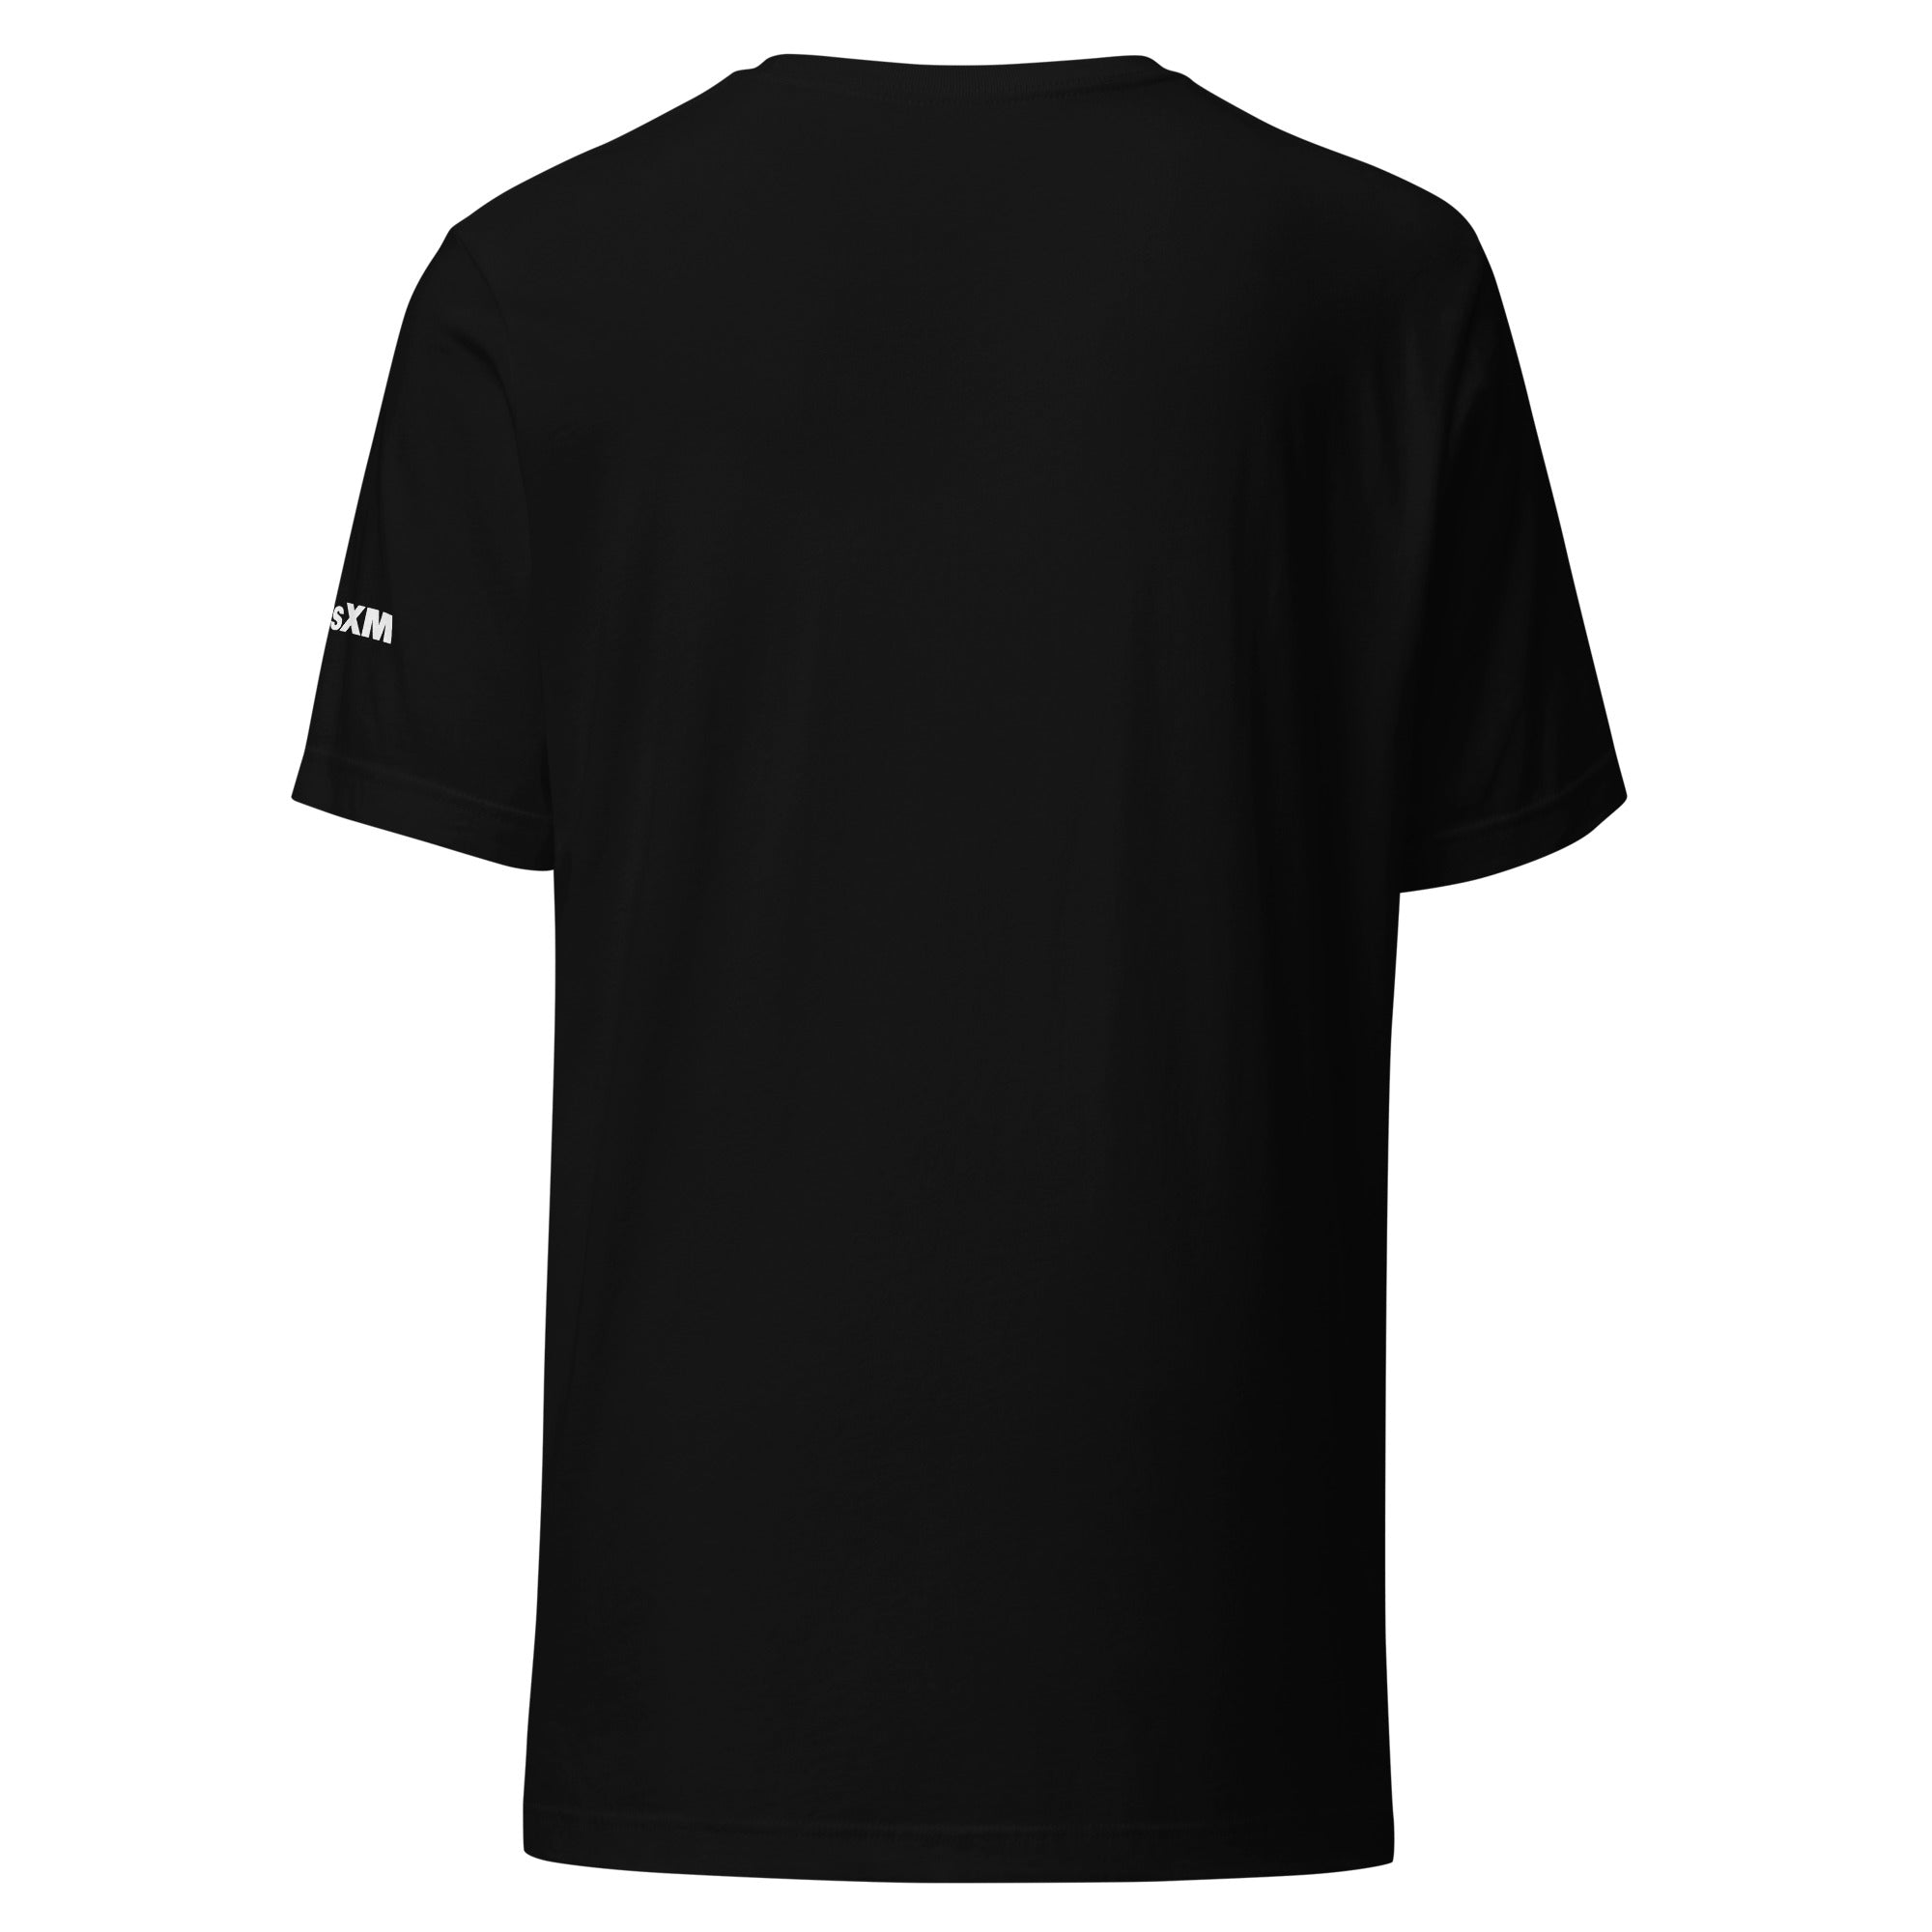 Águila: T-shirt (Black)